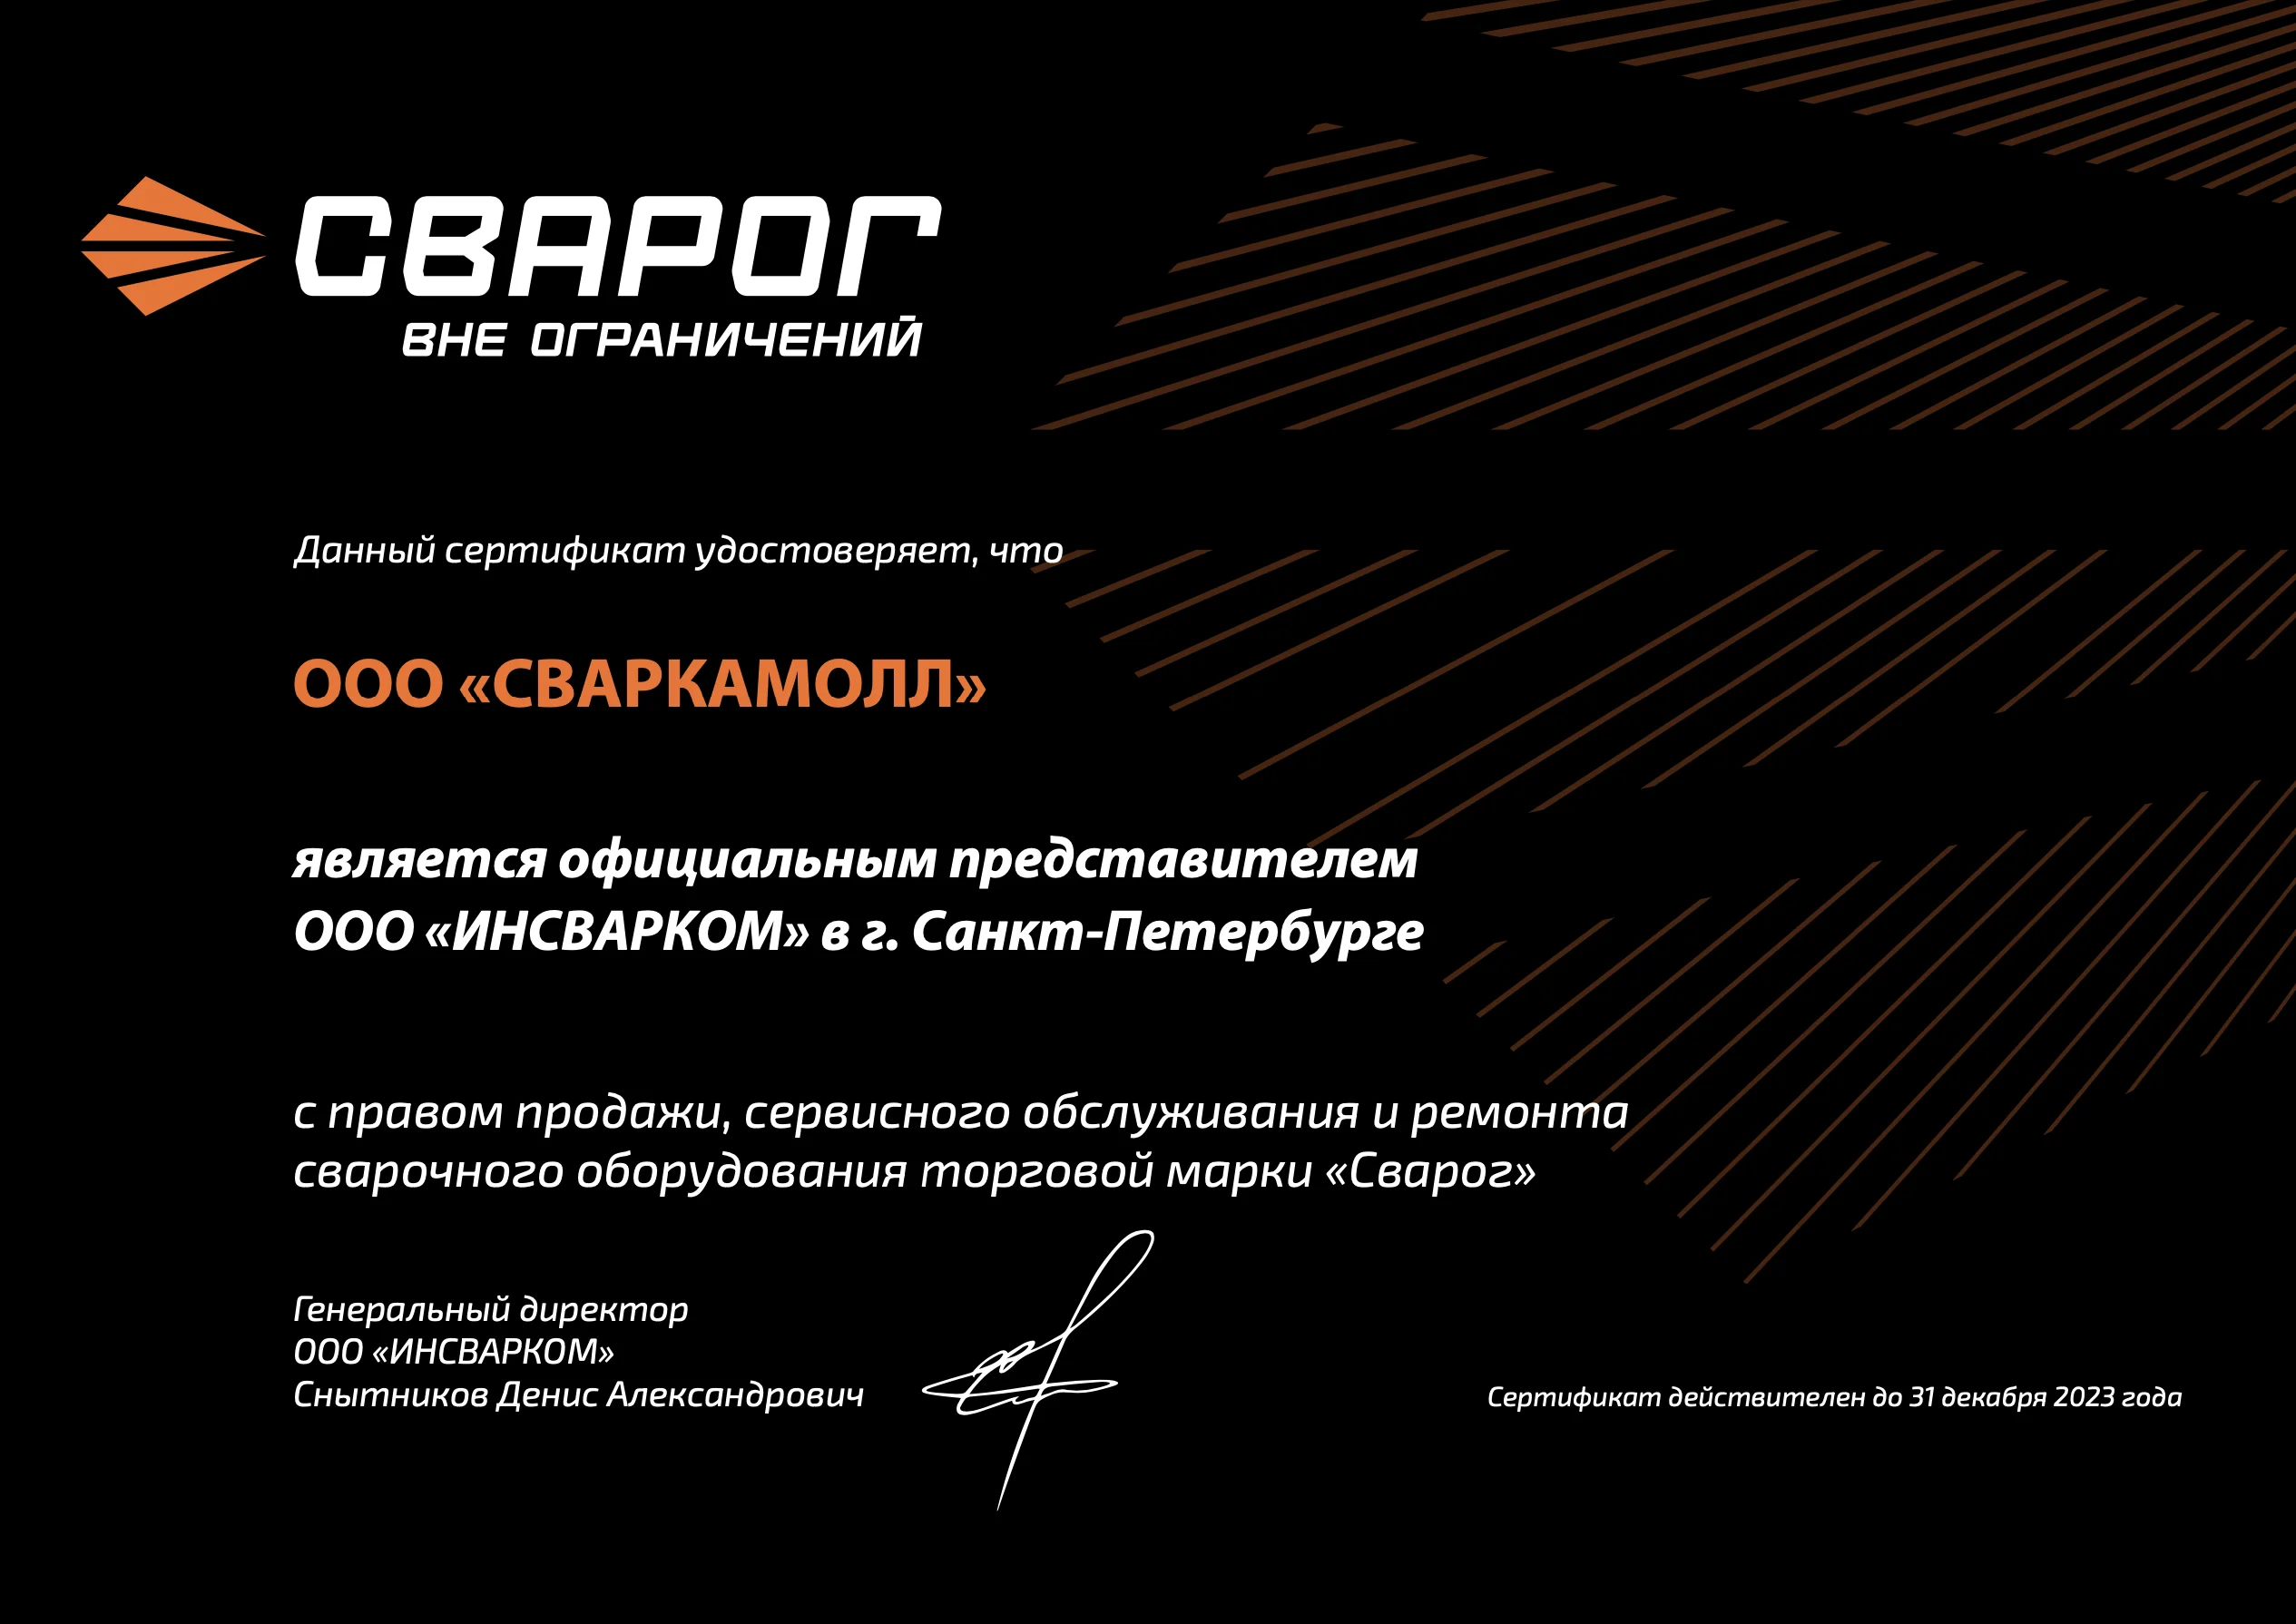 Сертификат дилера "СВАРОГ"